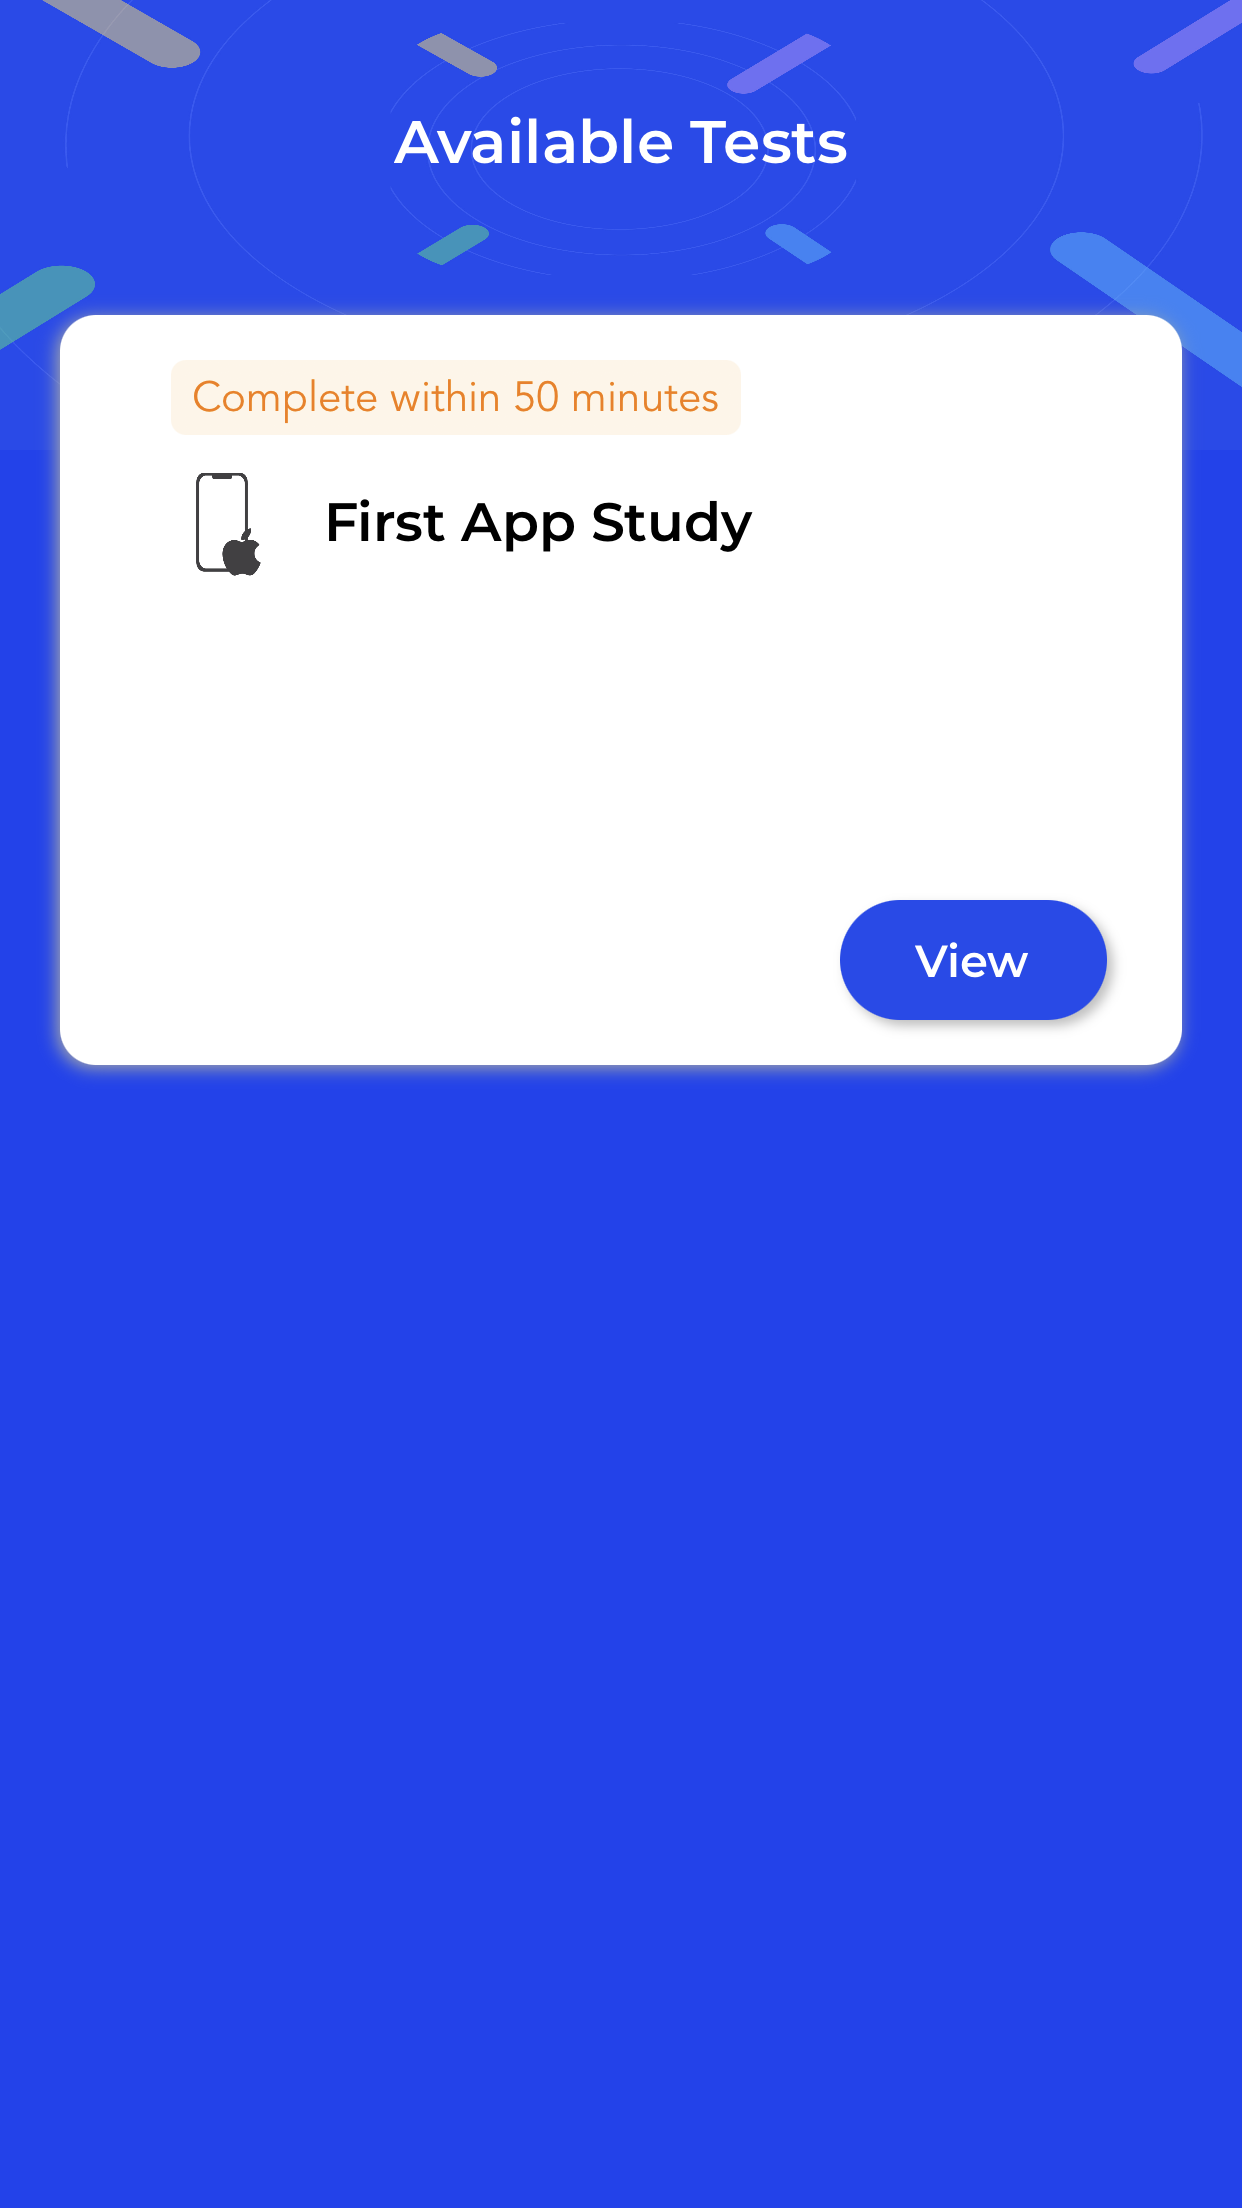 How to take an iOS App User Study on an iPhone/iPad?